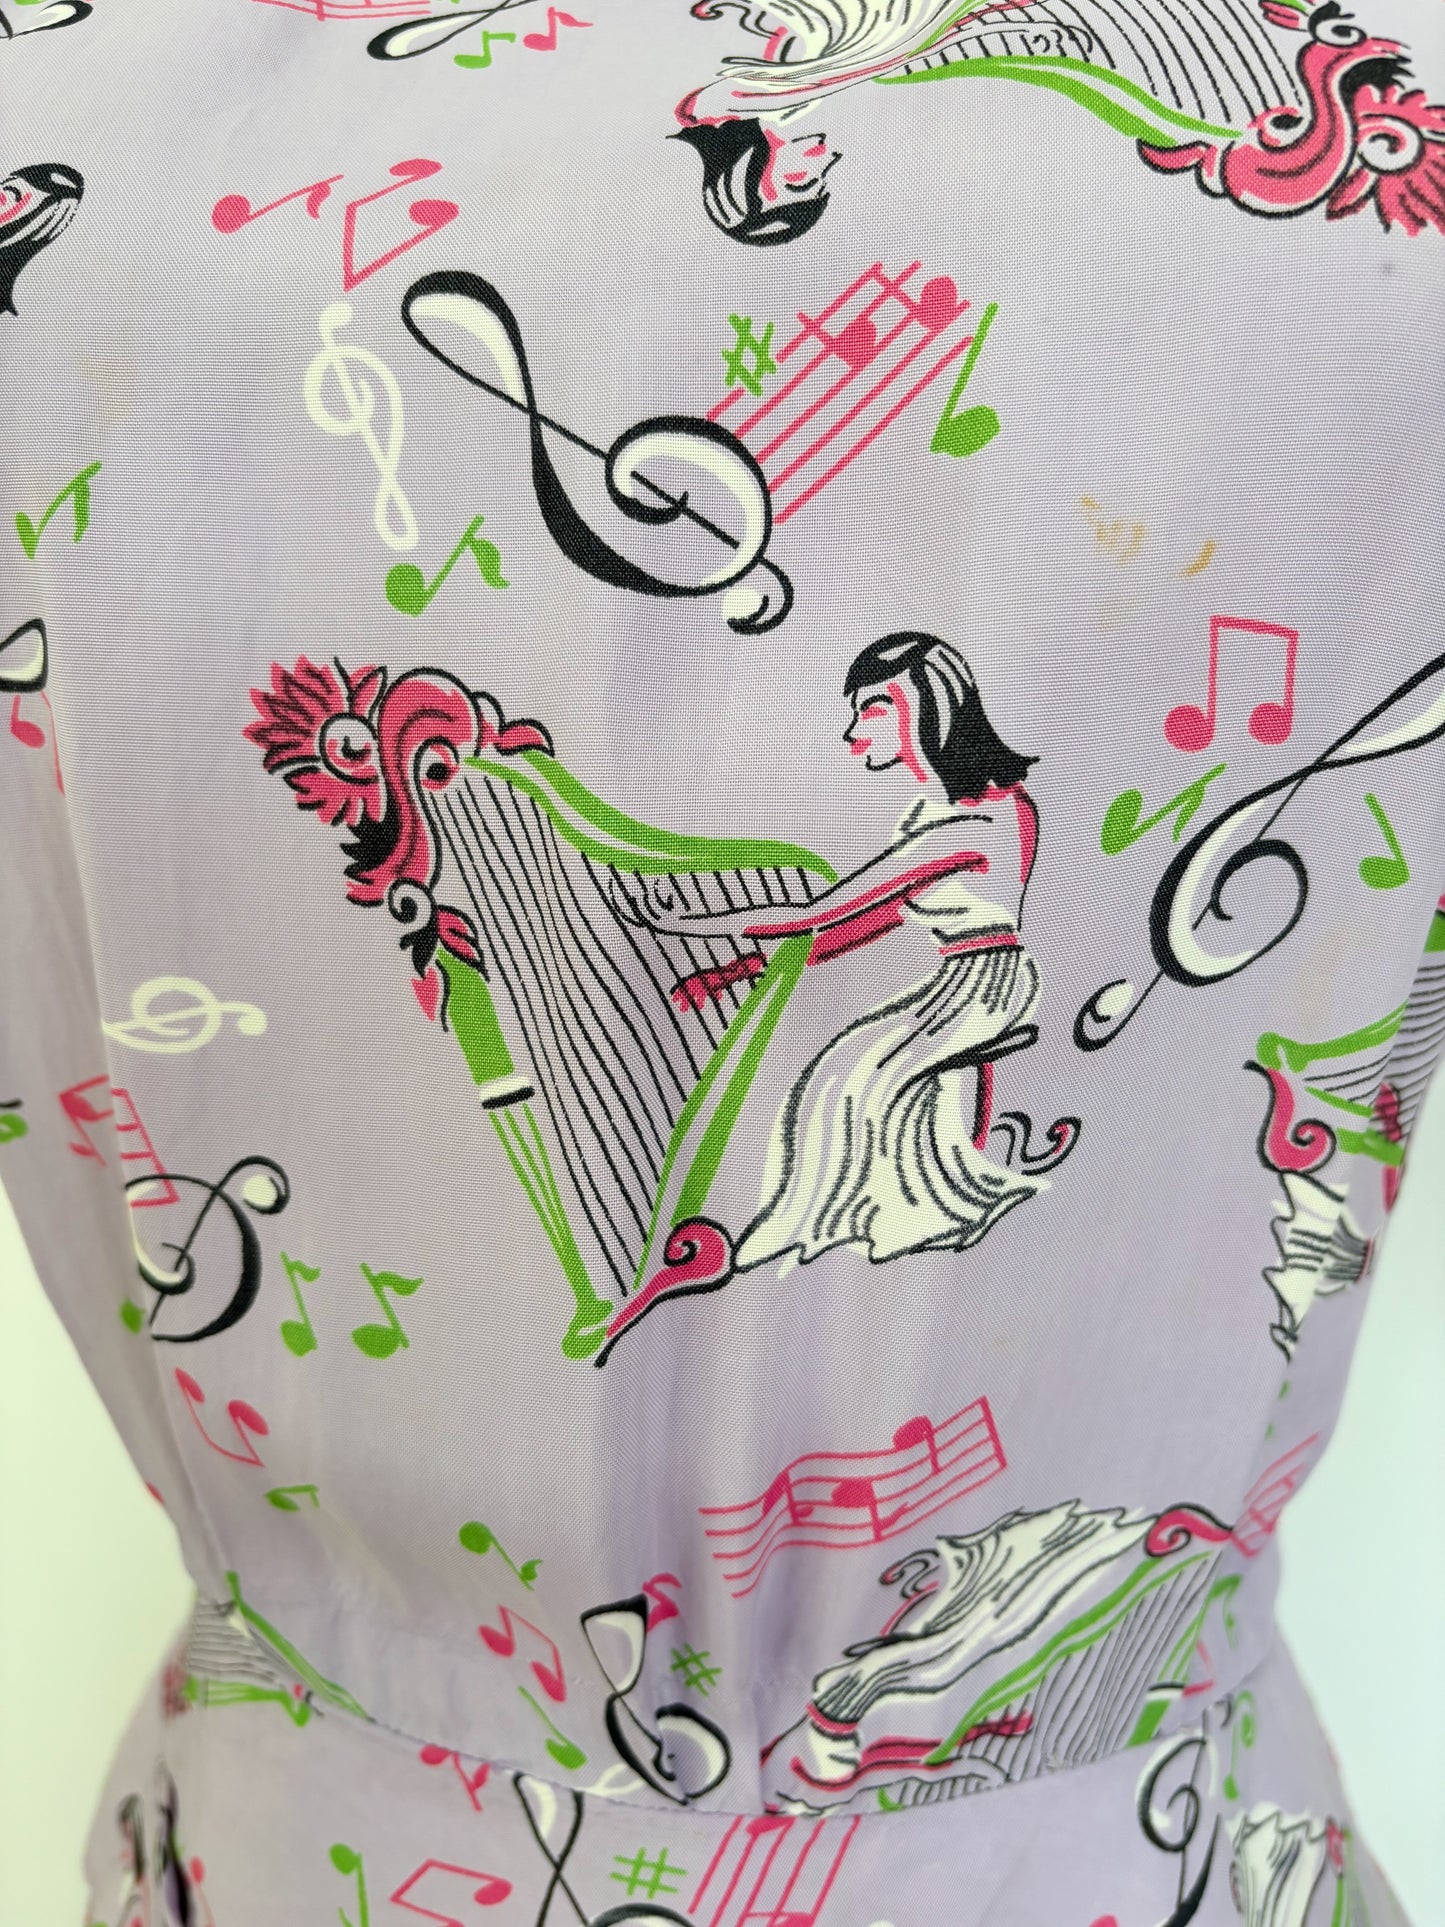 1940s Lilac Rayon Novelty Print Dress | S